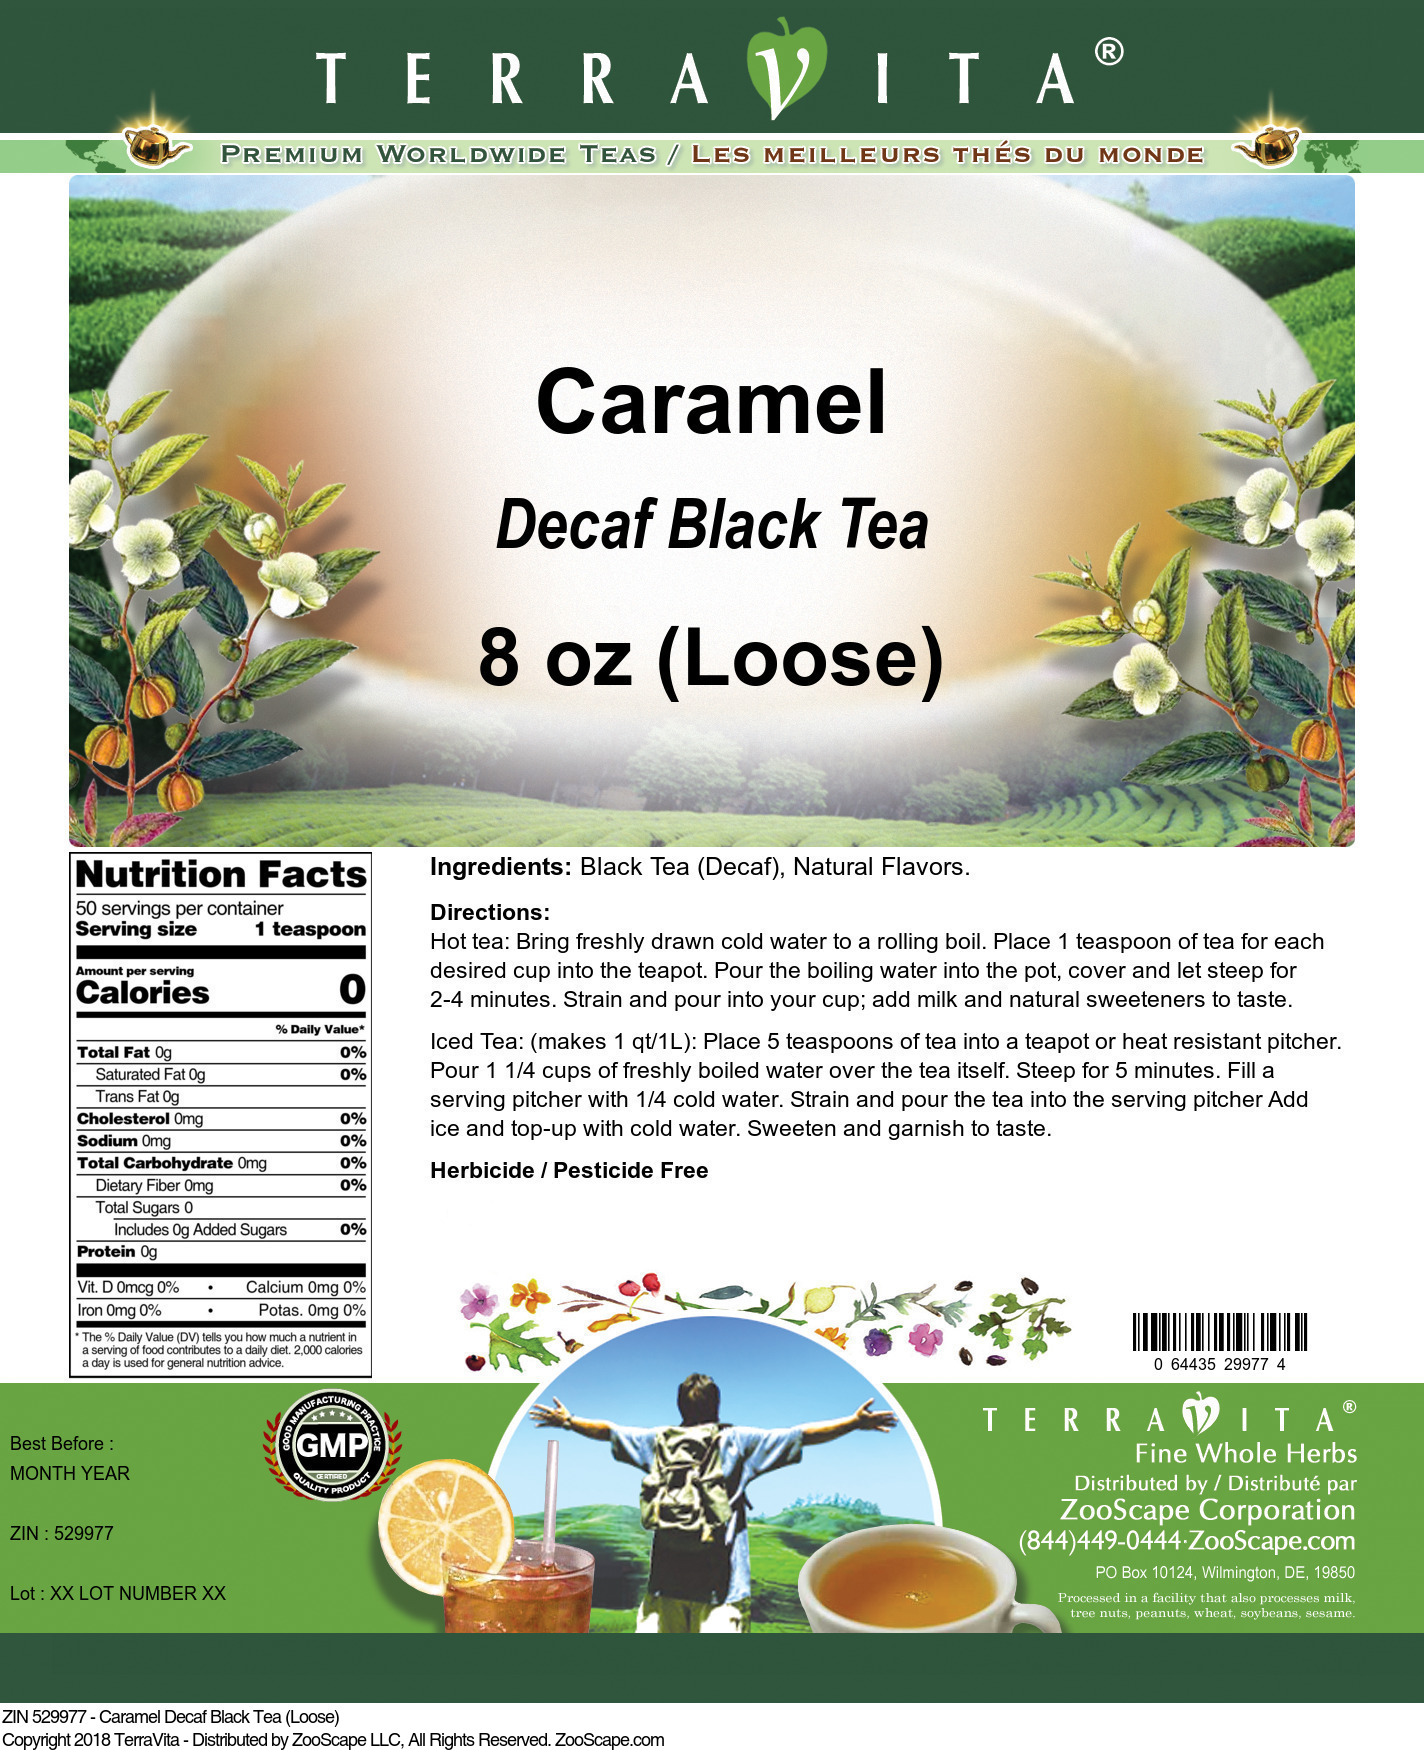 Caramel Decaf Black Tea (Loose) - Label